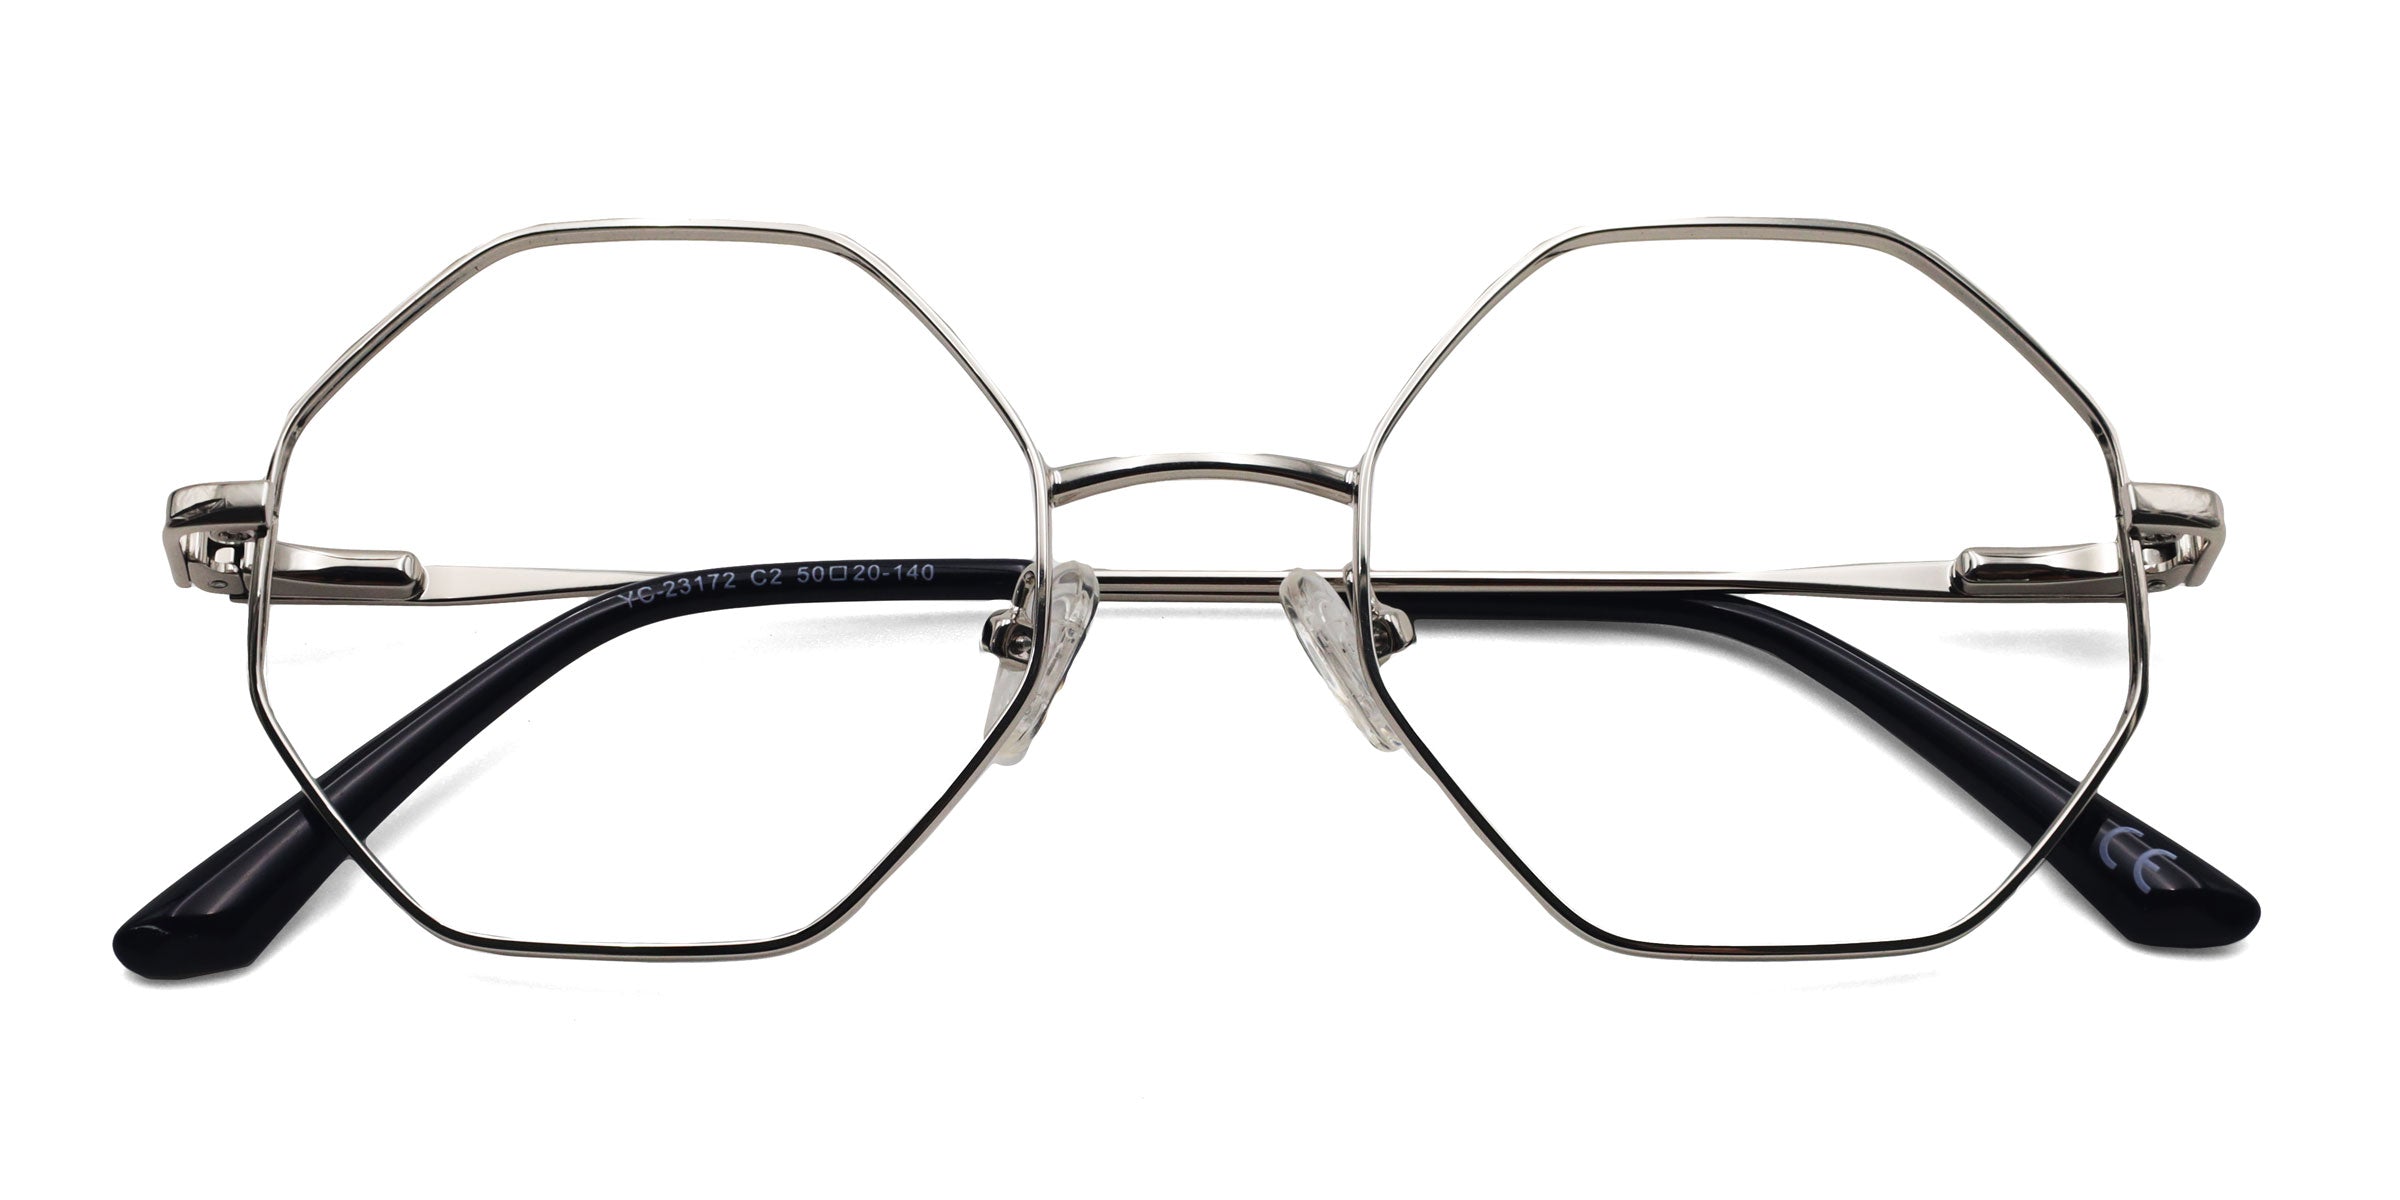 optimistic geometric silver eyeglasses frames top view